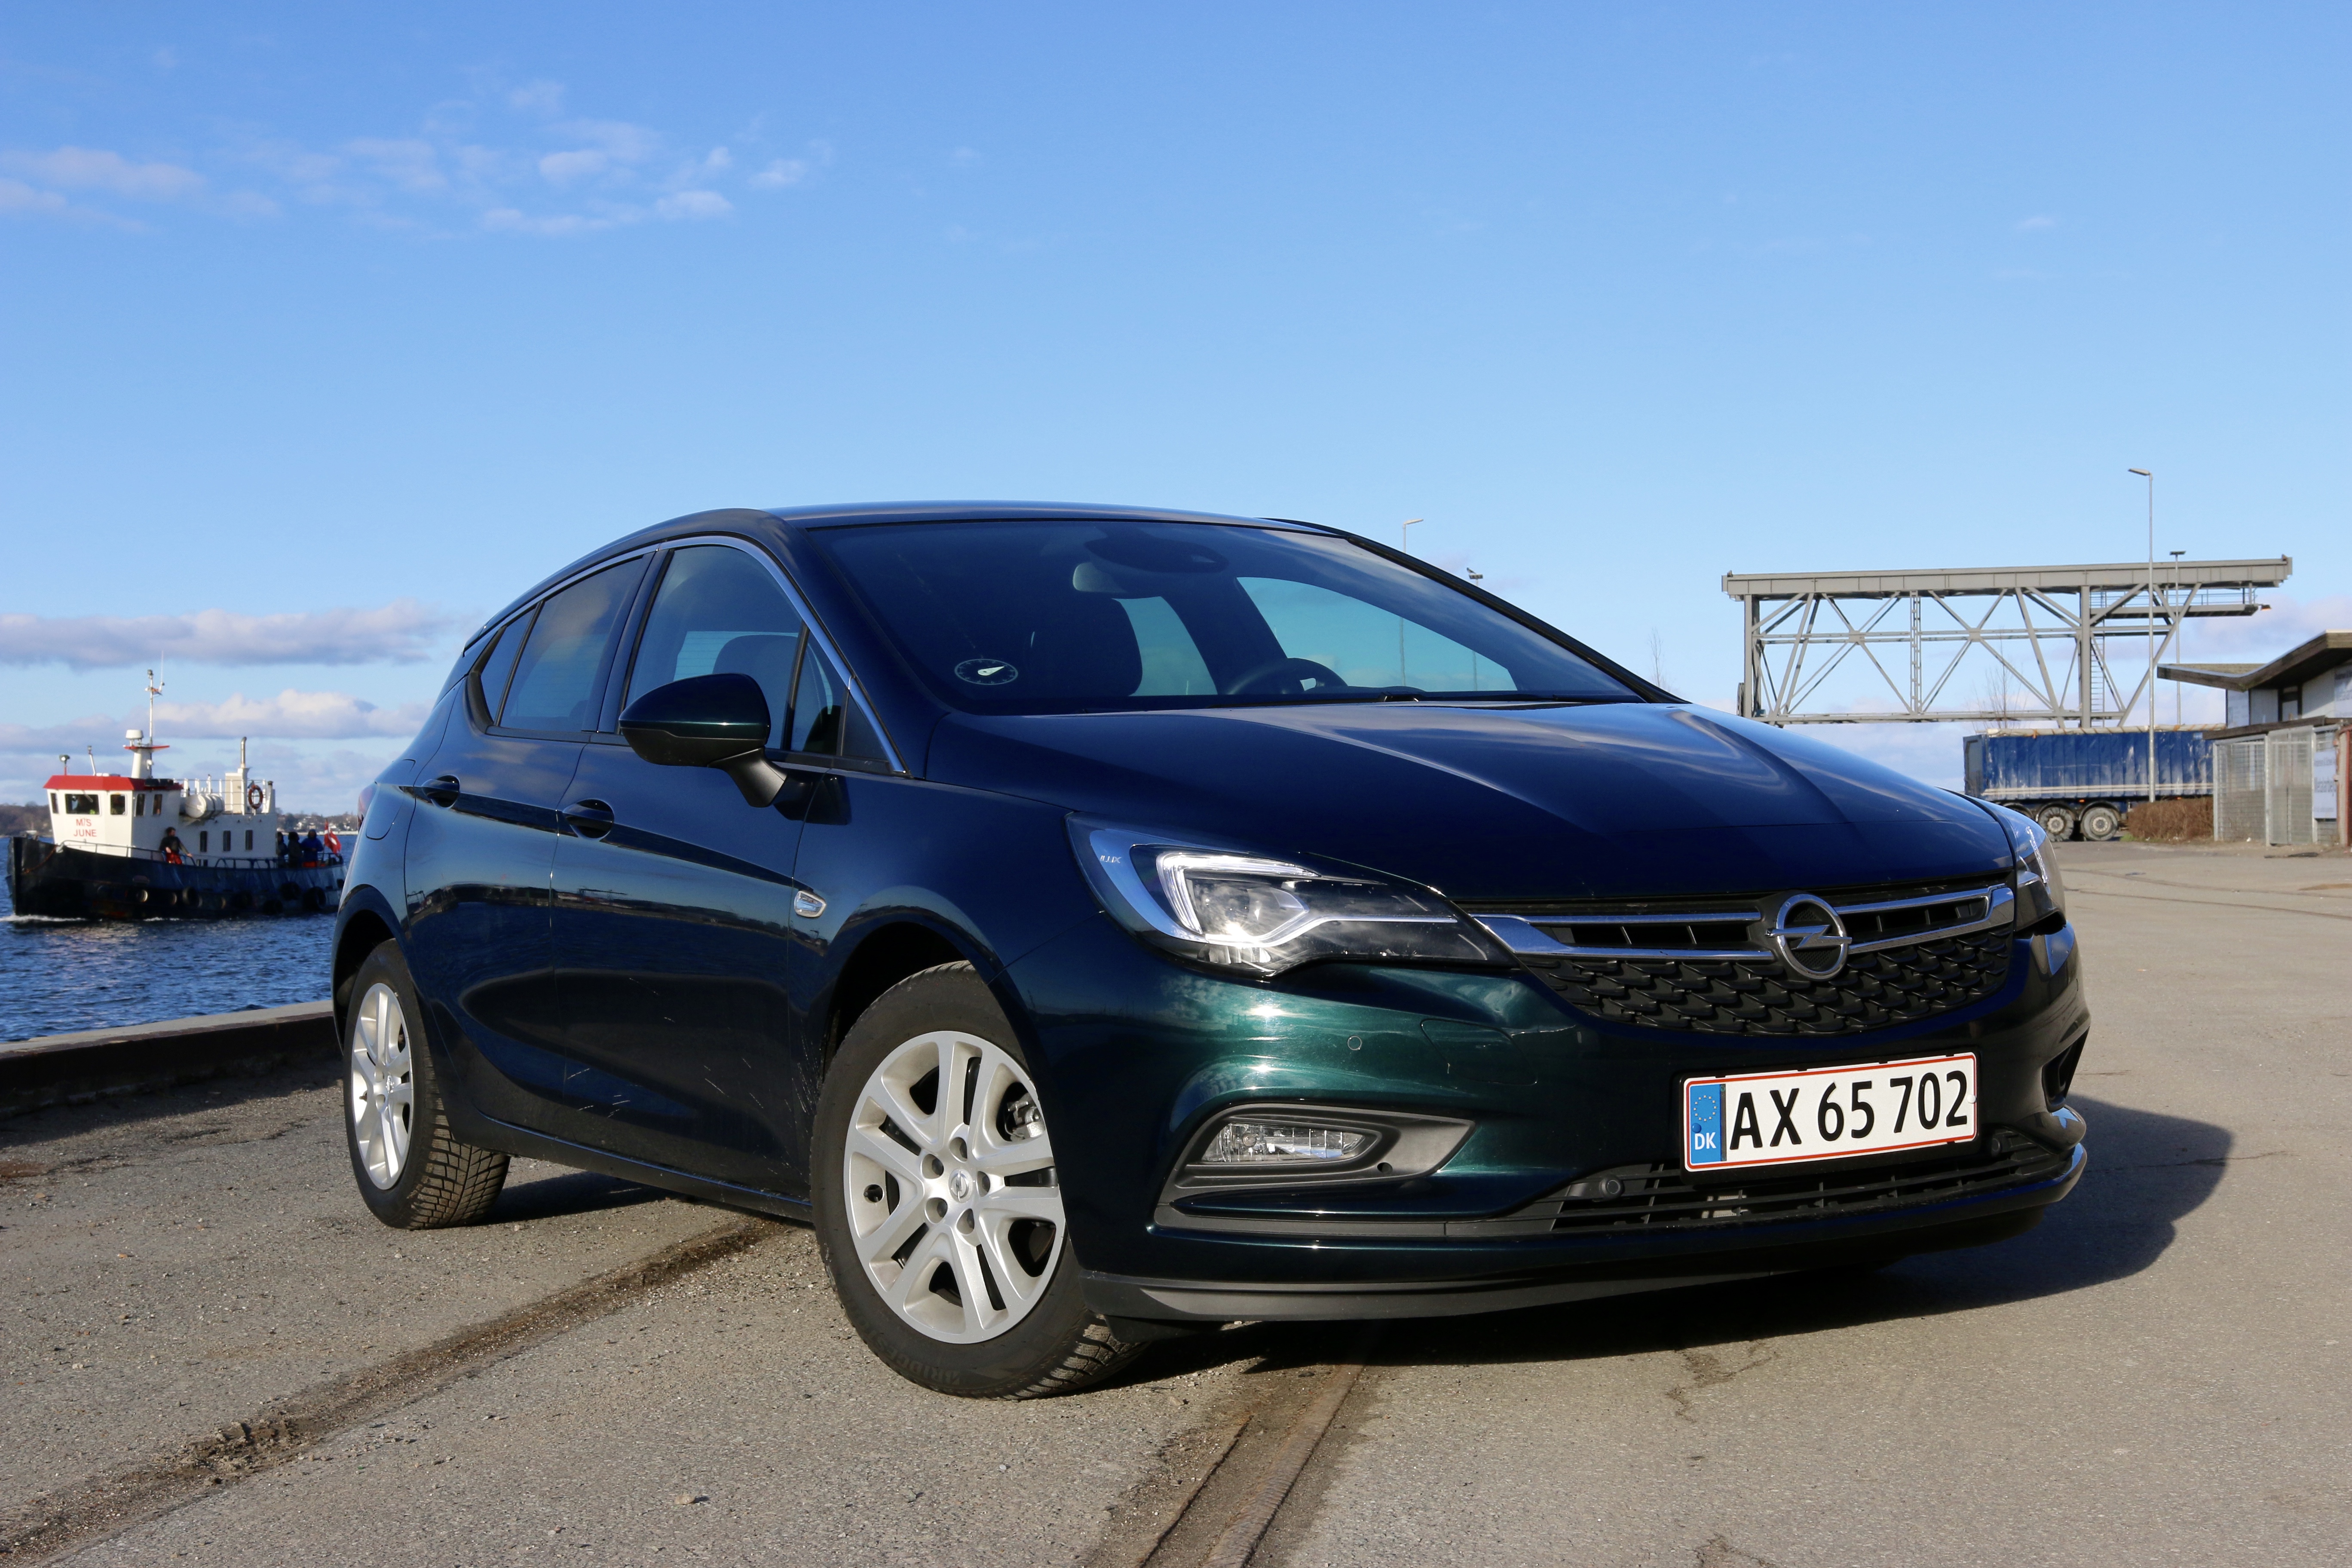 Opel Astra Hatchback exterior 2019